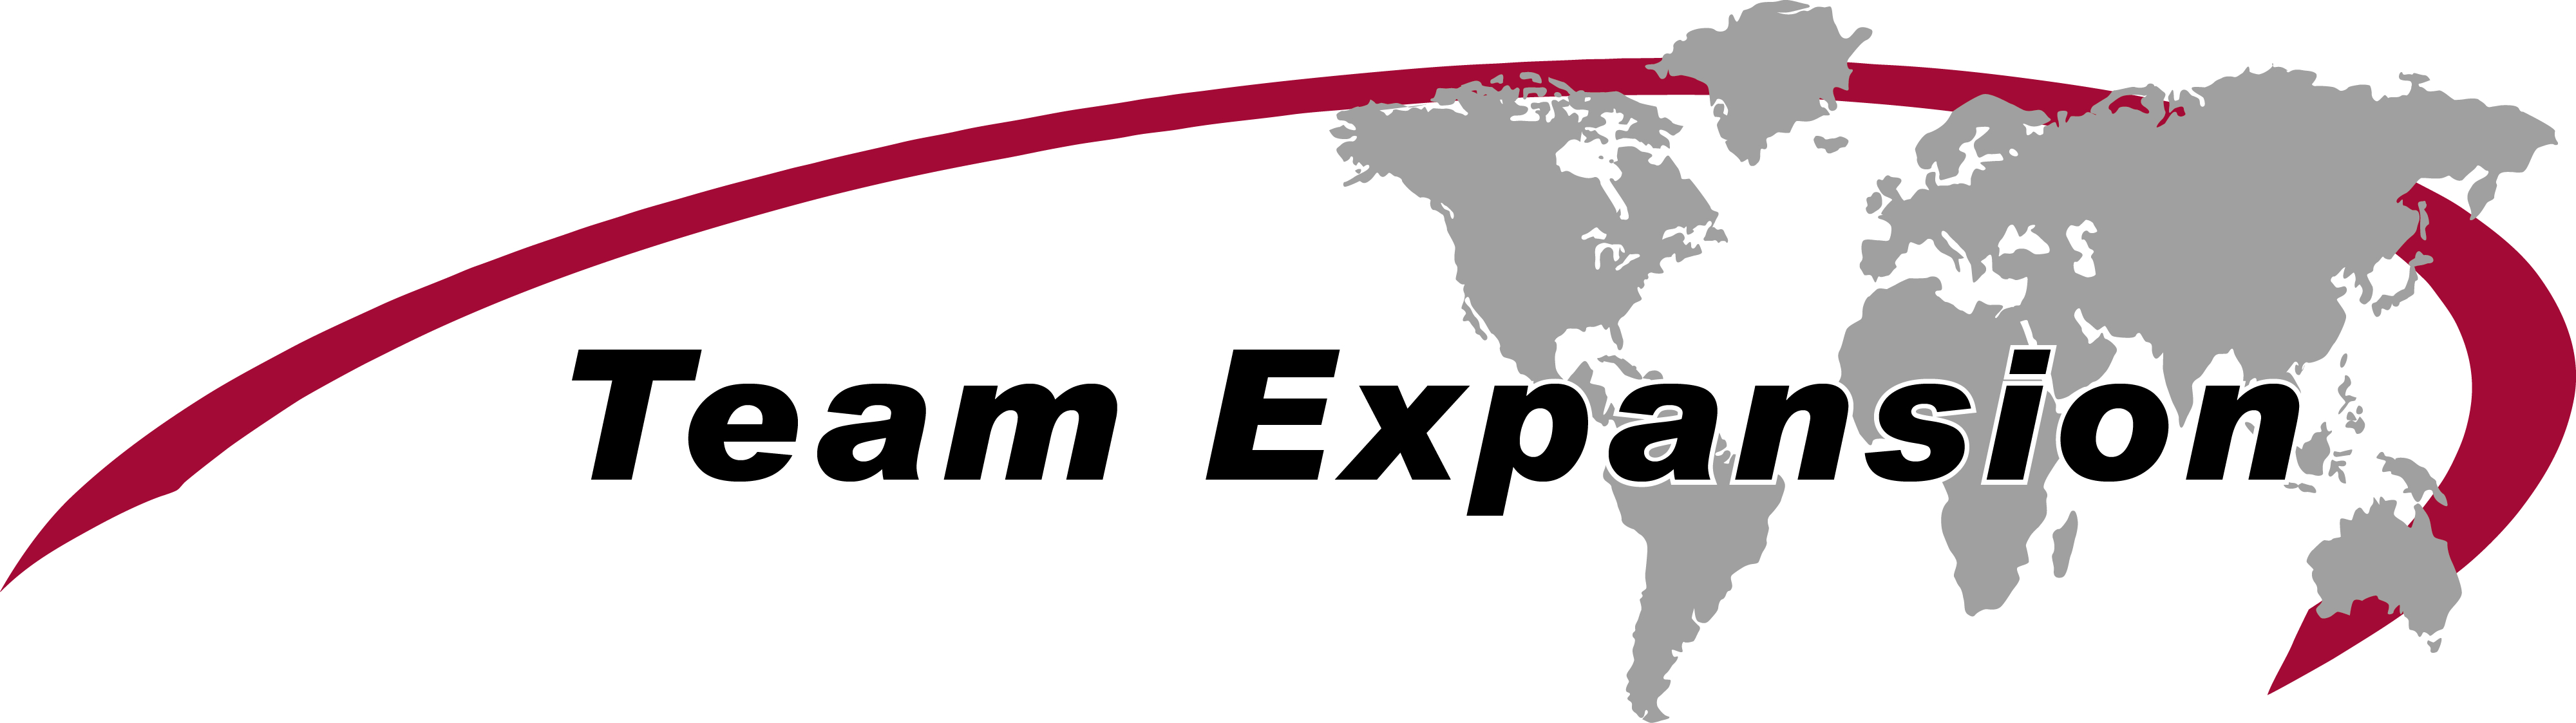 Team Expansion Logo